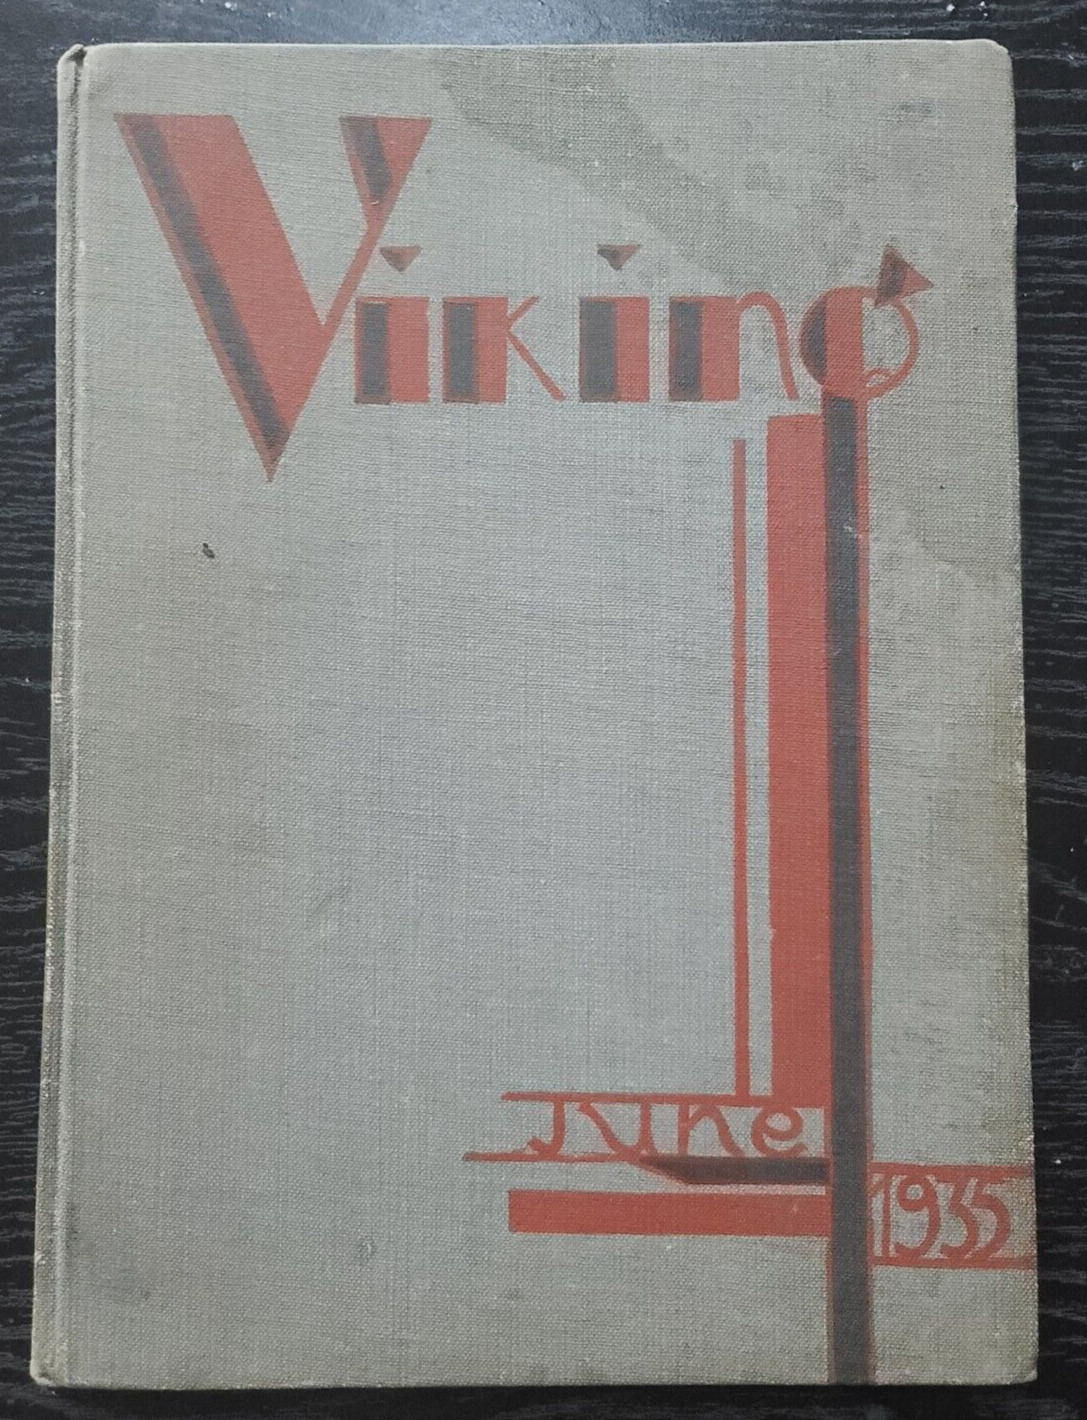 June 1935 Northern High School Yearbook - Detroit, Michigan   The Viking 1935